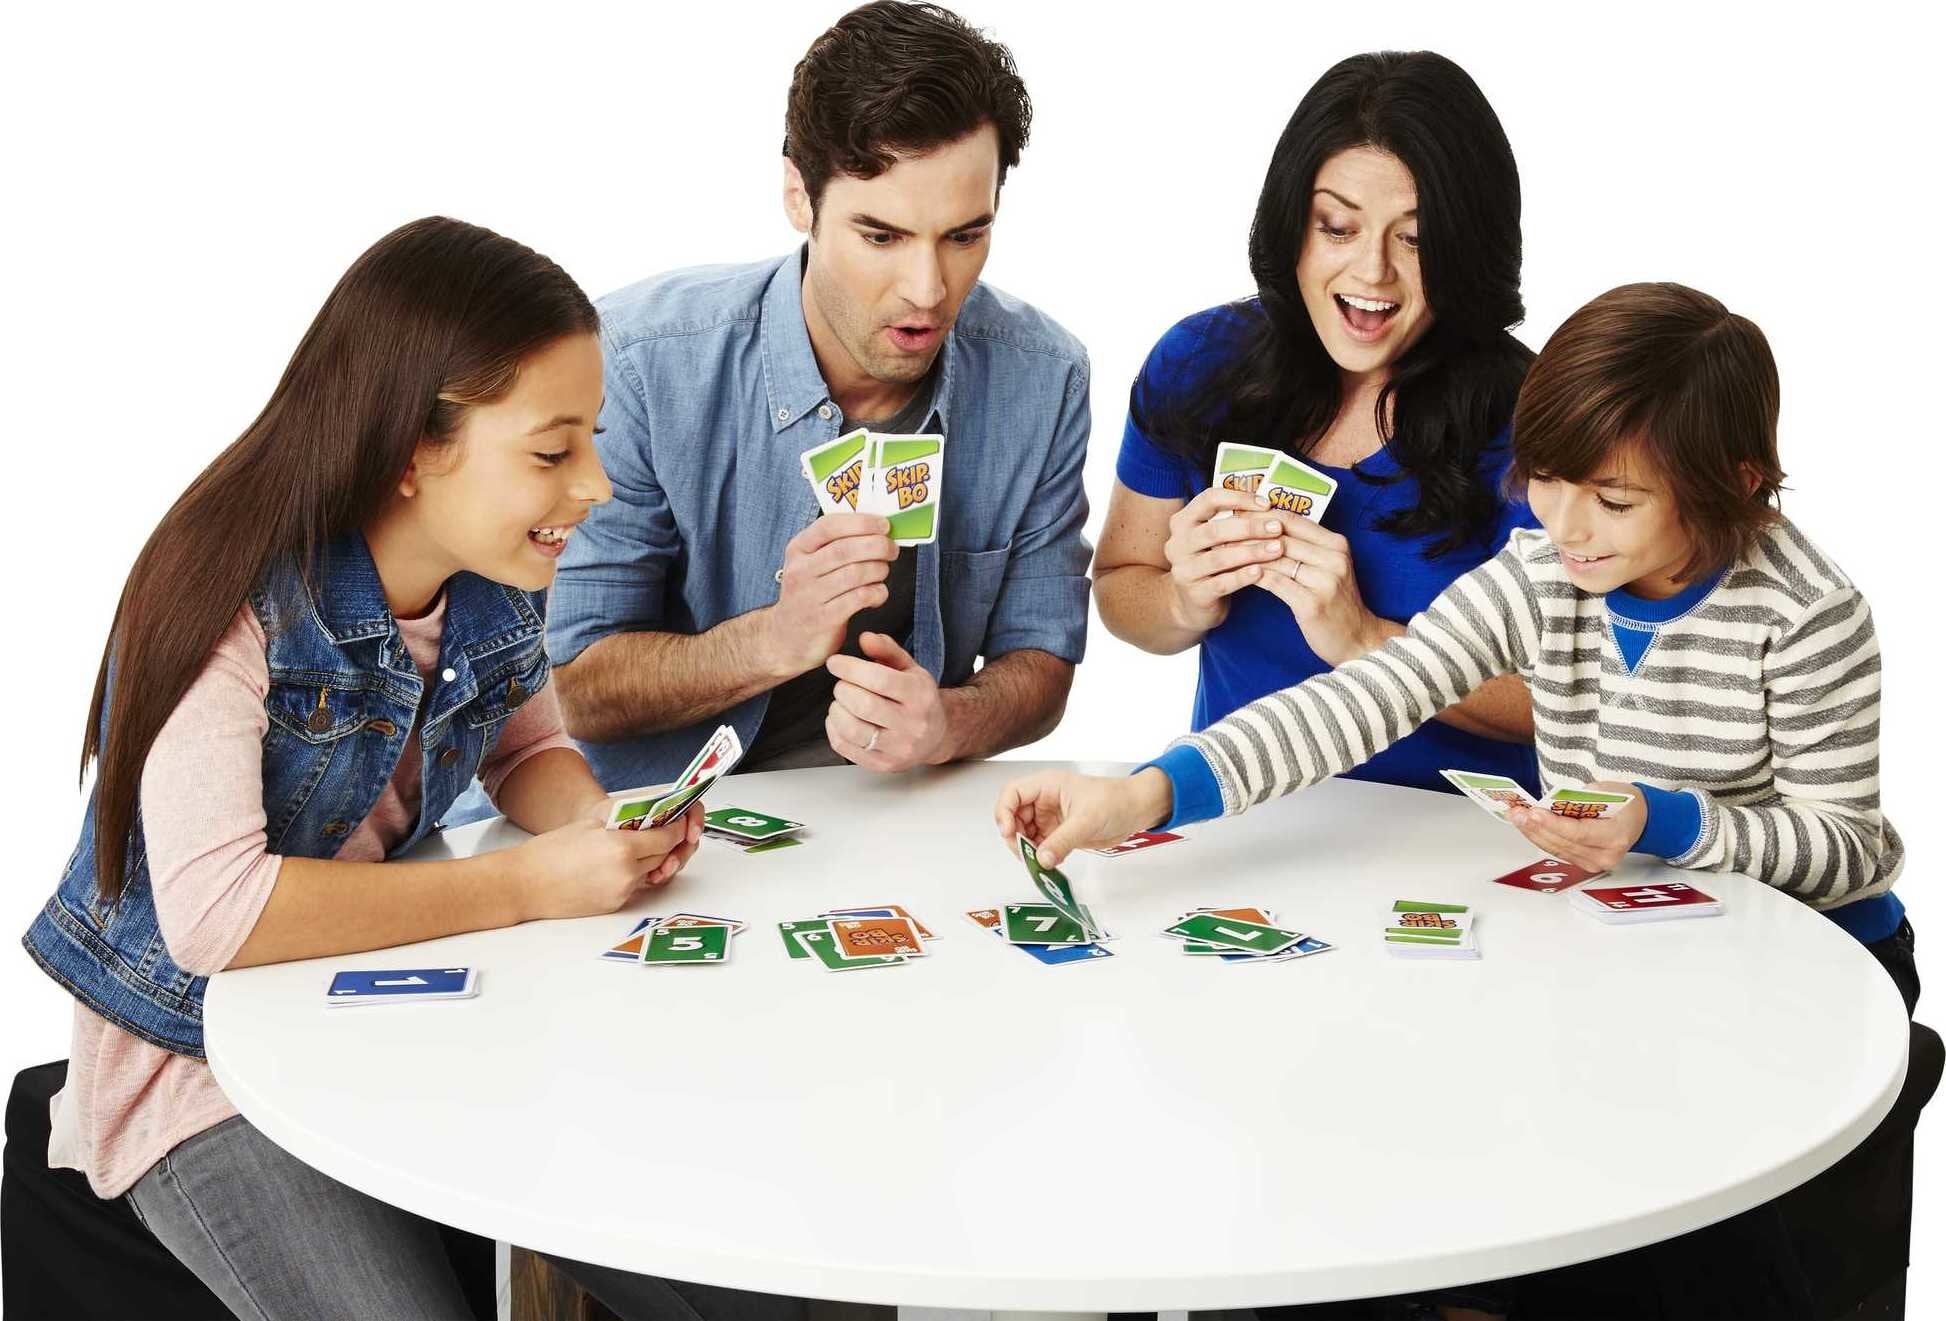 Skip Bo Card Rack, 4 Place Skip Bo Game Card Rack, Playing Card Holder,  Card Rack, Draw and Discard Rack, Playing Card Gift, Game Room 